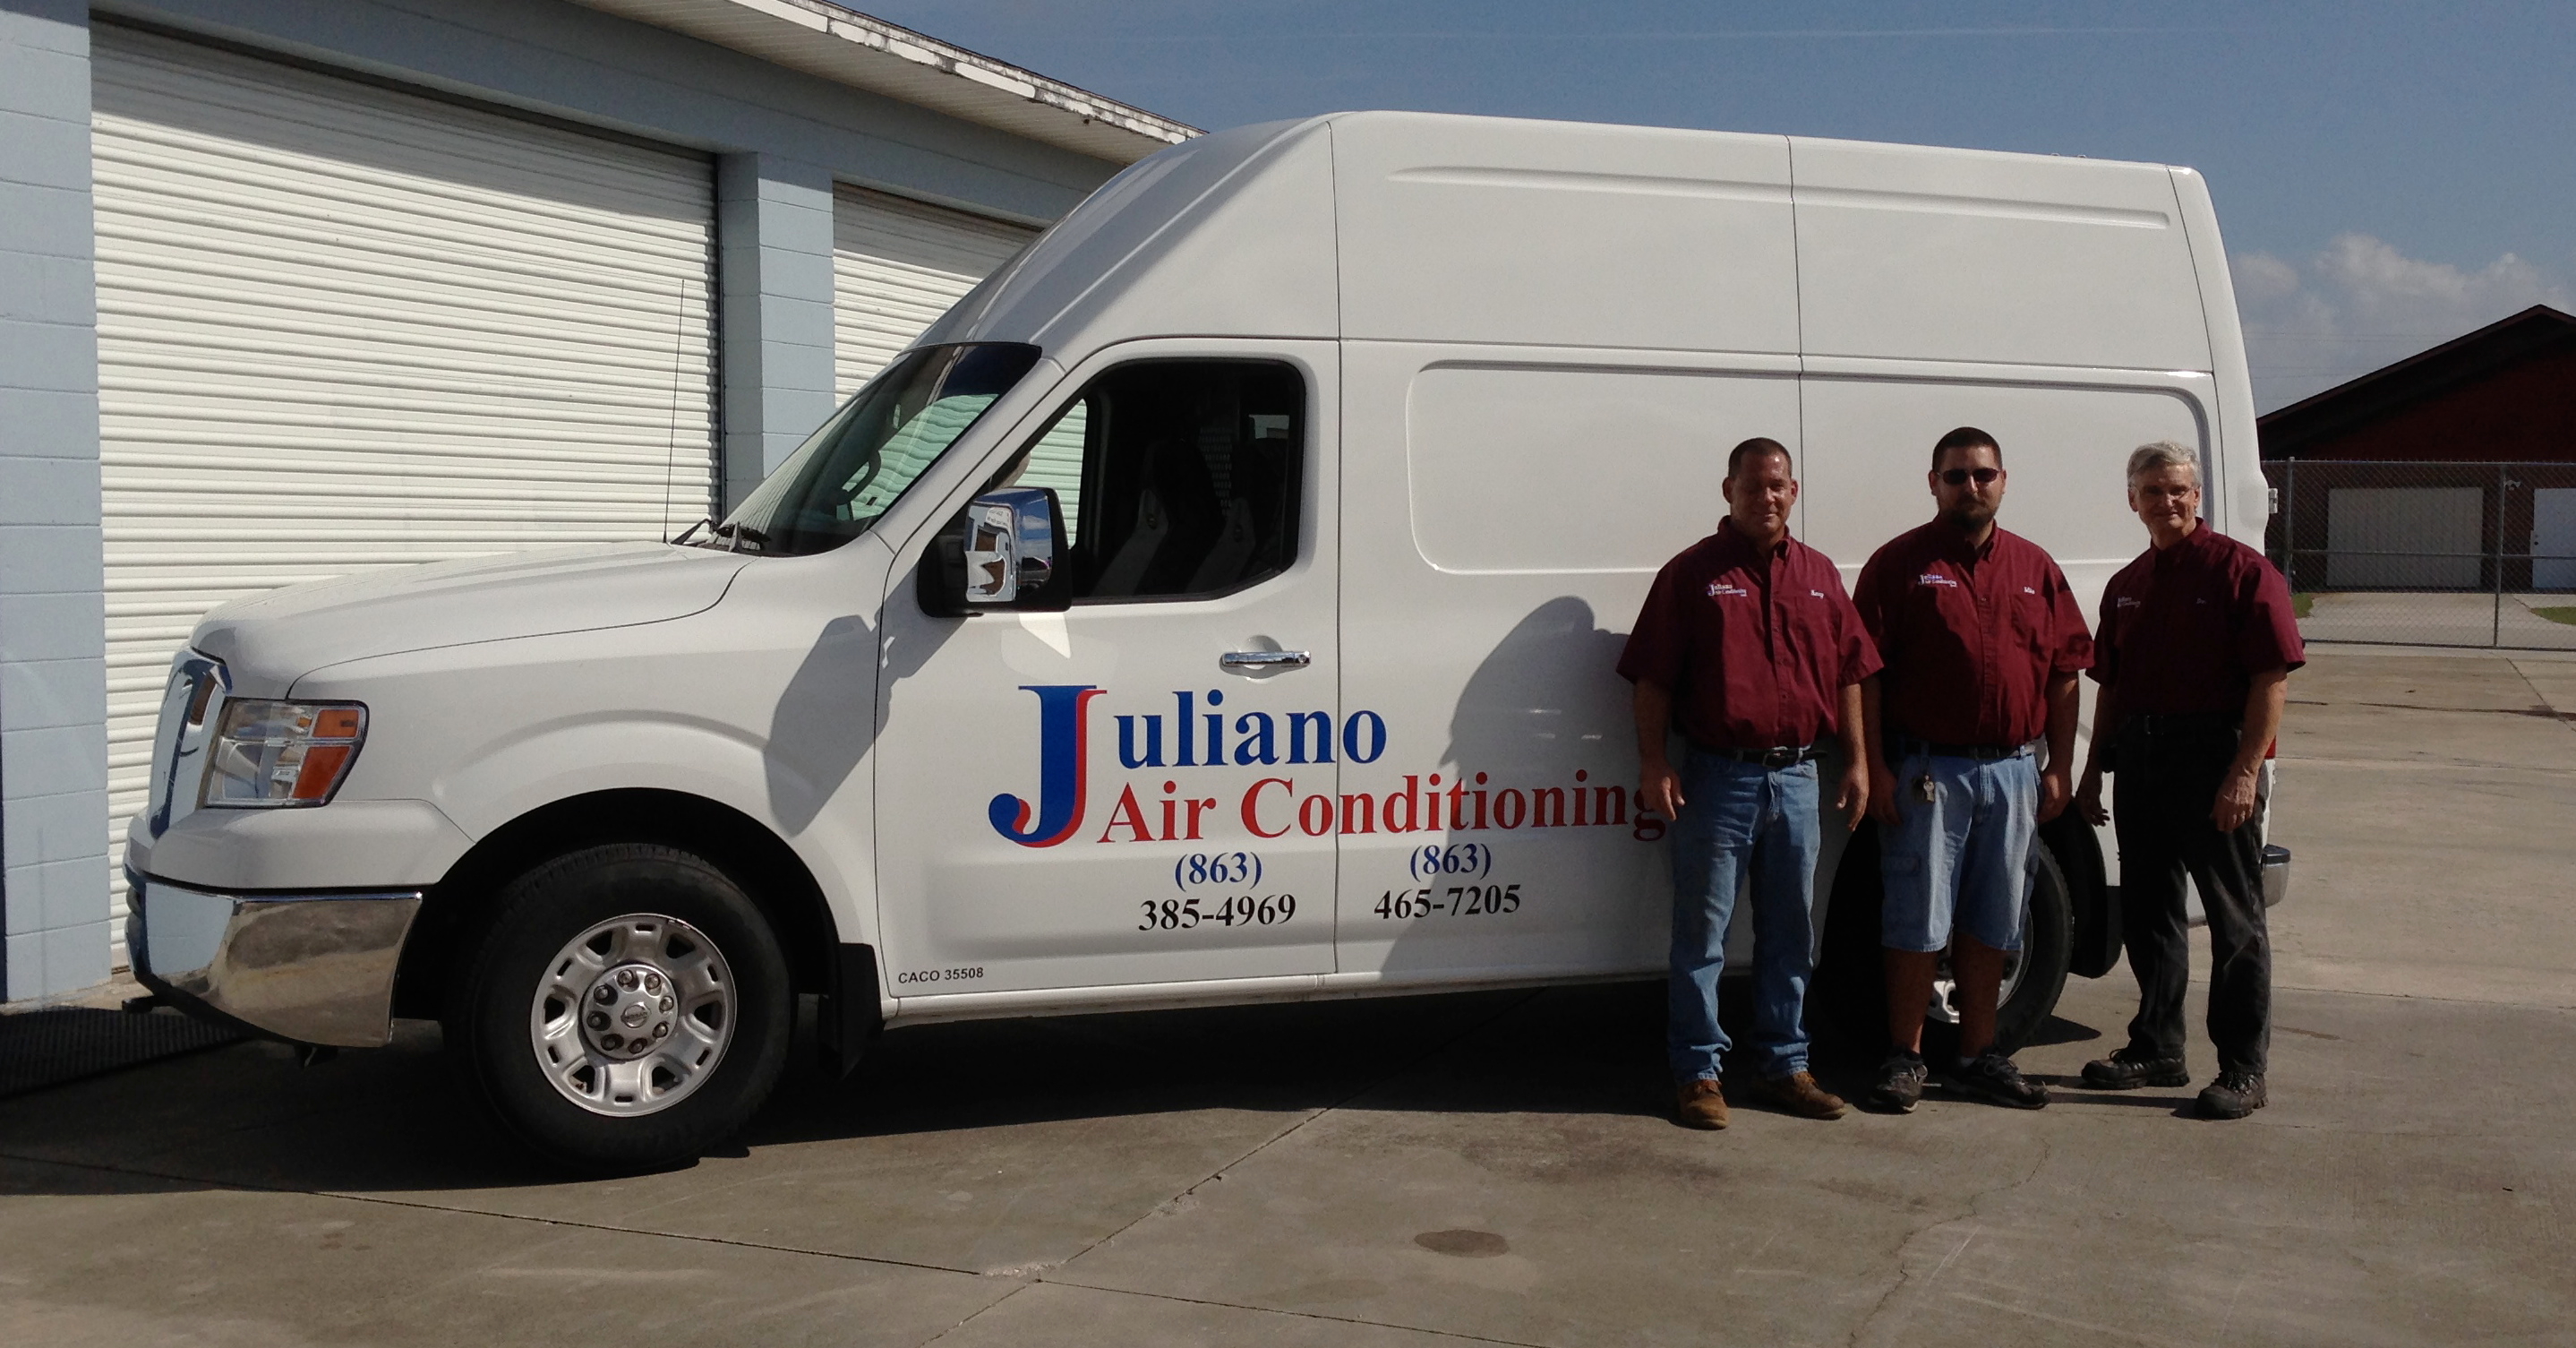 Juliano Air Conditioning Inc Sebring (863)385-4969